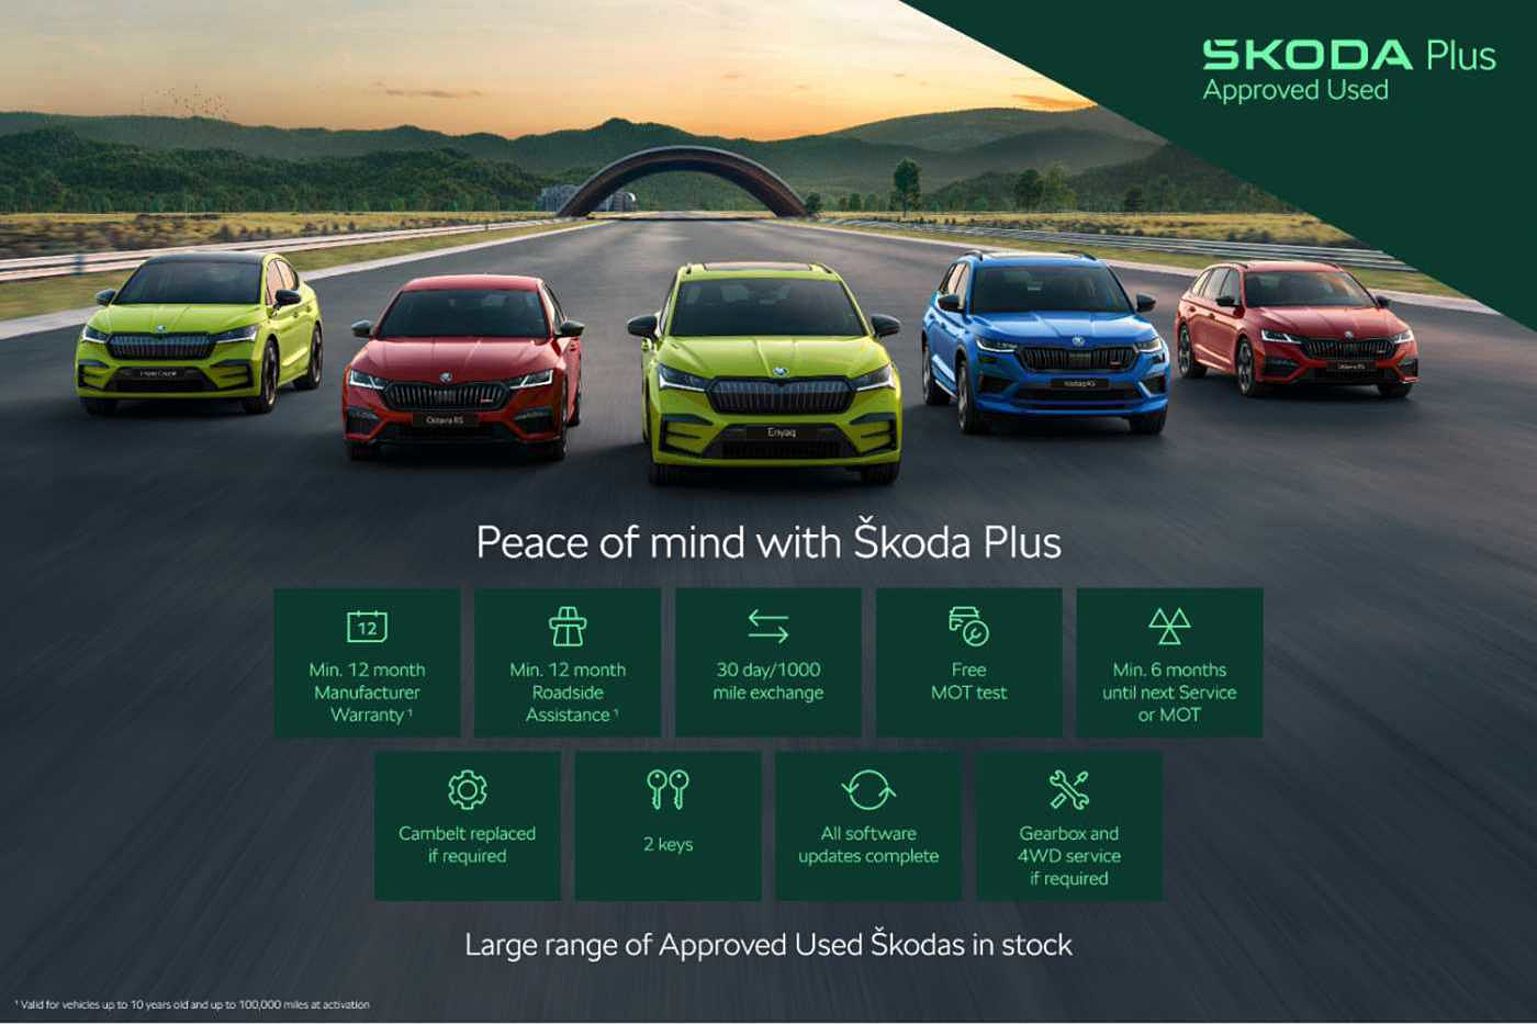 SKODA Superb 2.0 TSI (190ps) SportLine Plus Auto/DSG Hatchback